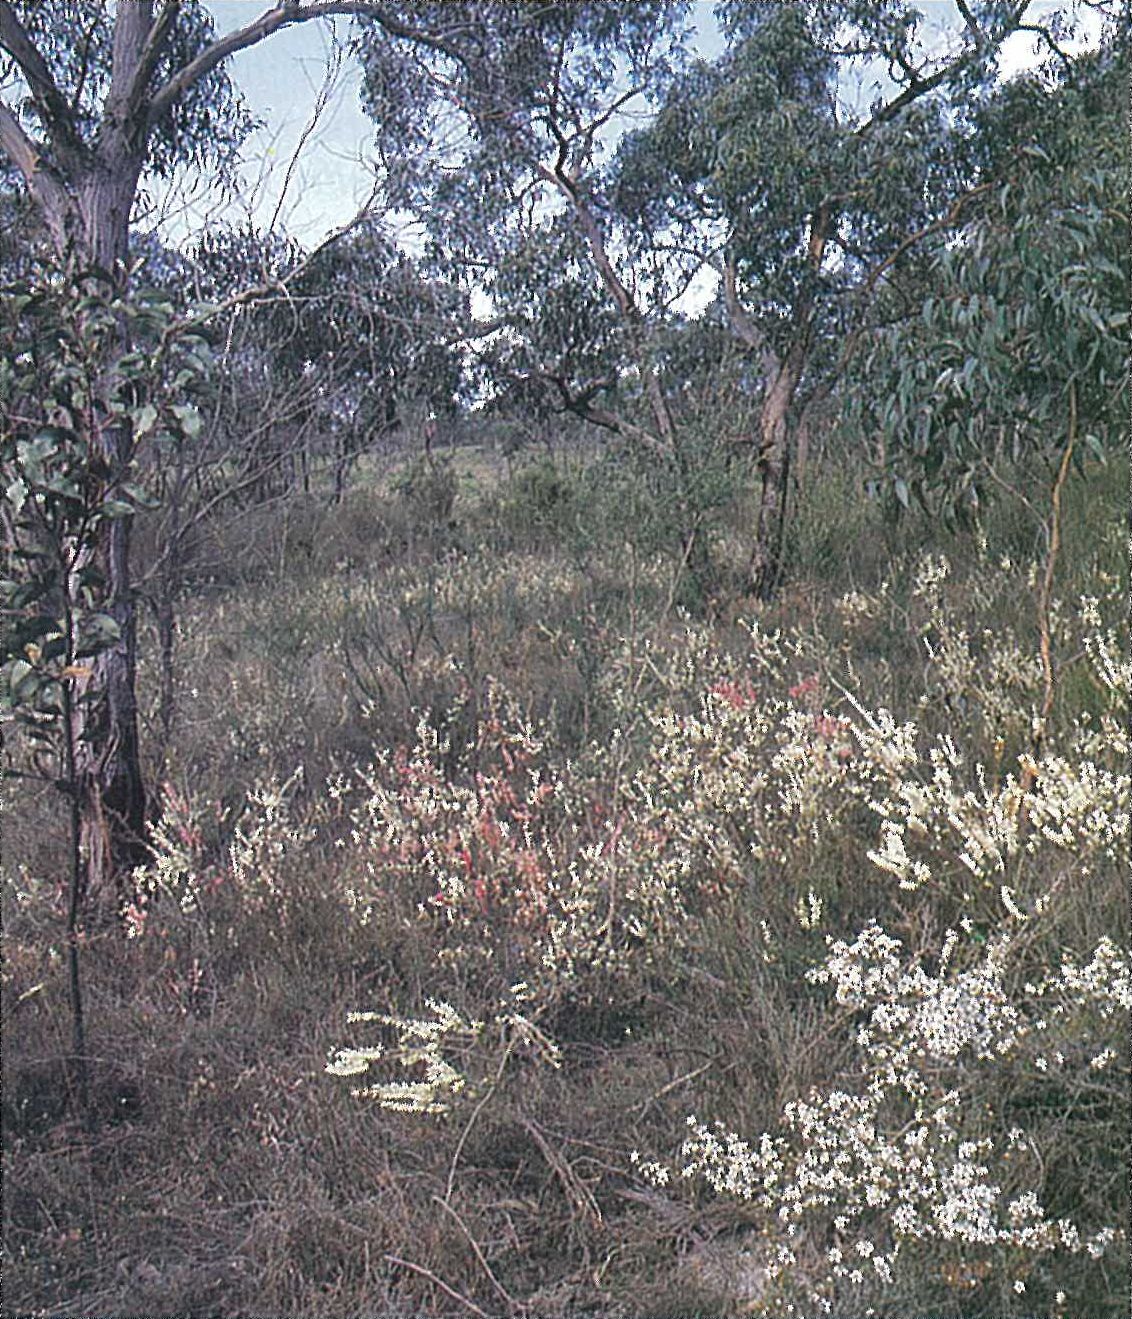 Otway Plain; Leptospermum myrsinoides heathland. Heathland/woodland with Eucalyptus baxteri over Acacia suaveolens, Banksia marginata, Dillwynia glaberrima, Epacris impressa, Leptospermum myrsinoides and Xanthorrhea minor. Forest Reserve, Anglesea.